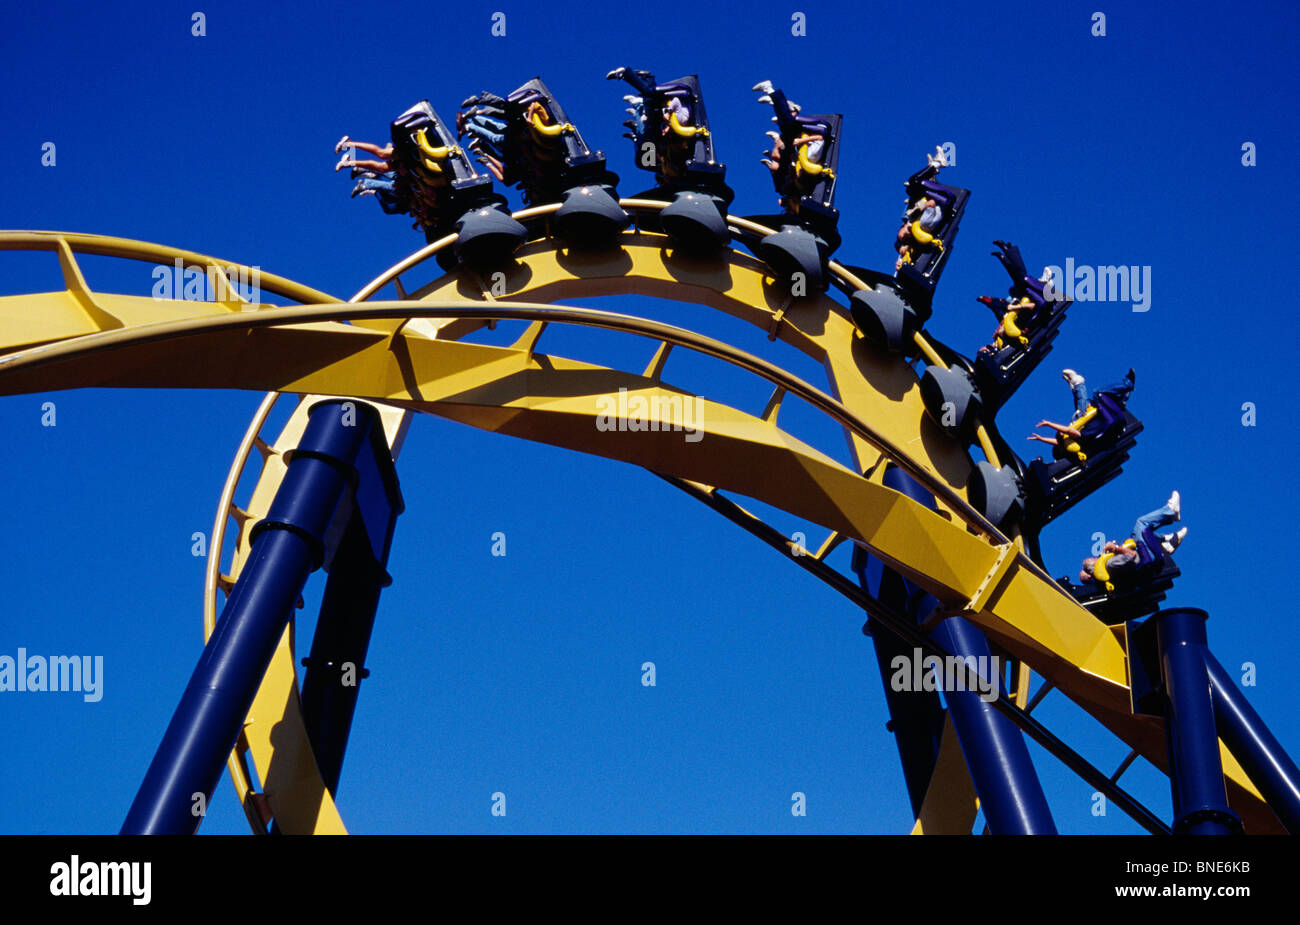 USA, Texas, Dallas, Six Flags Over Texas amusement park, Roller Coaster against blue sky Stock Photo